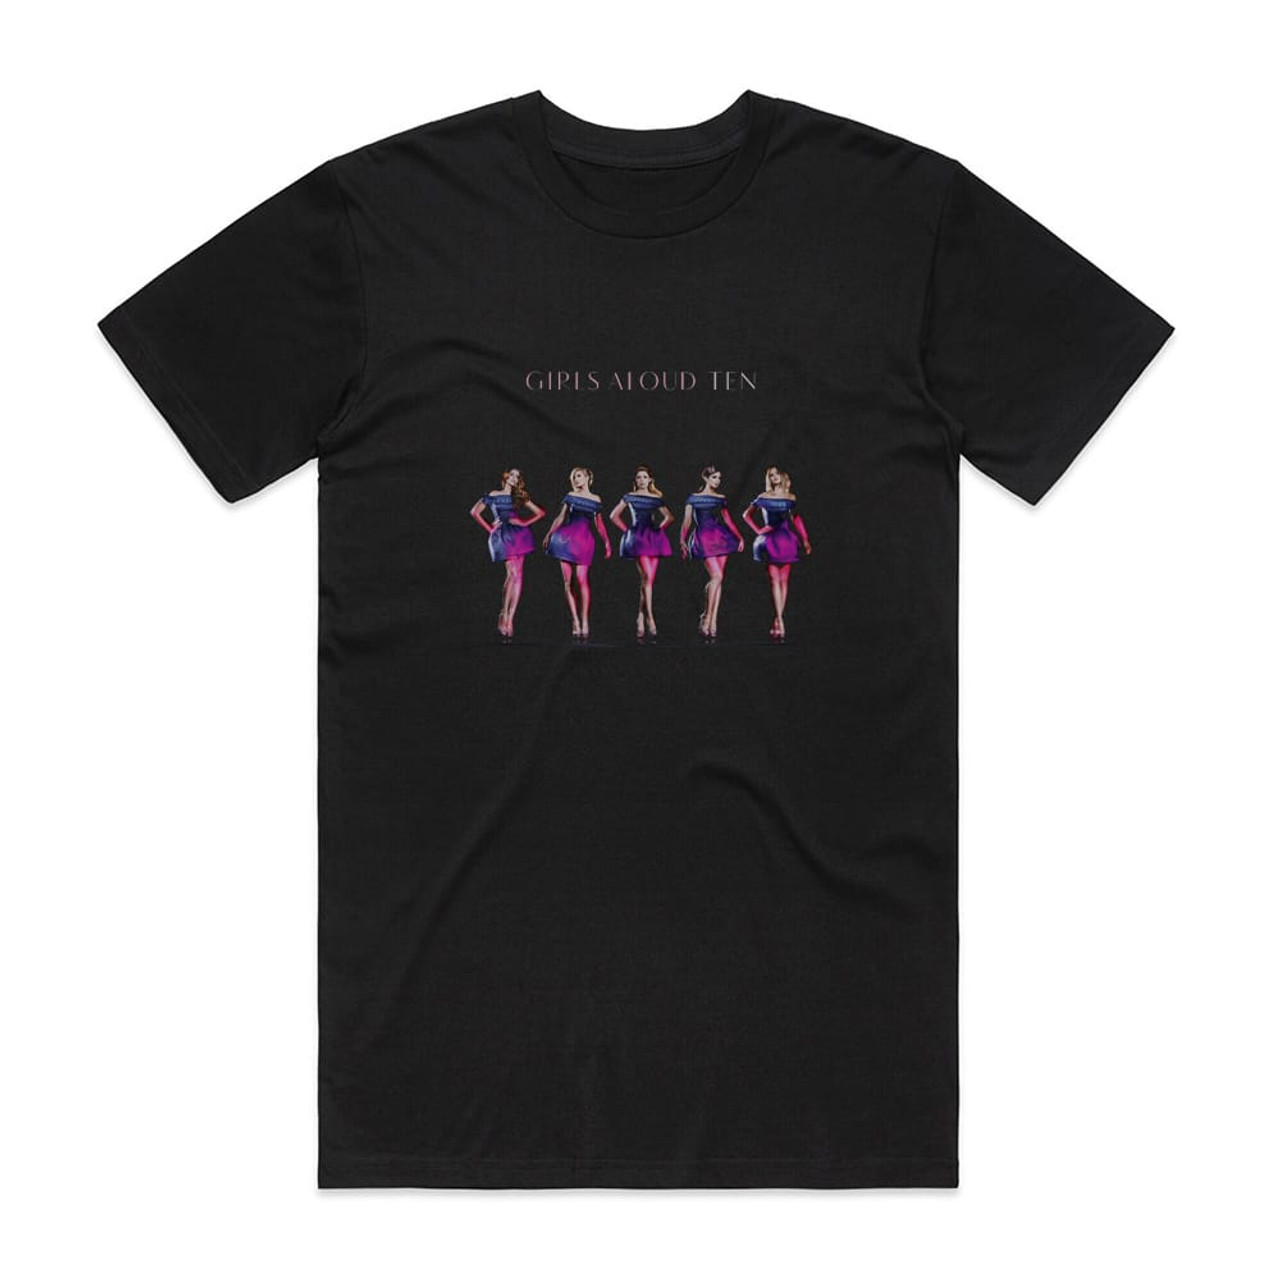 Girls Aloud Ten Album Cover T-Shirt Black